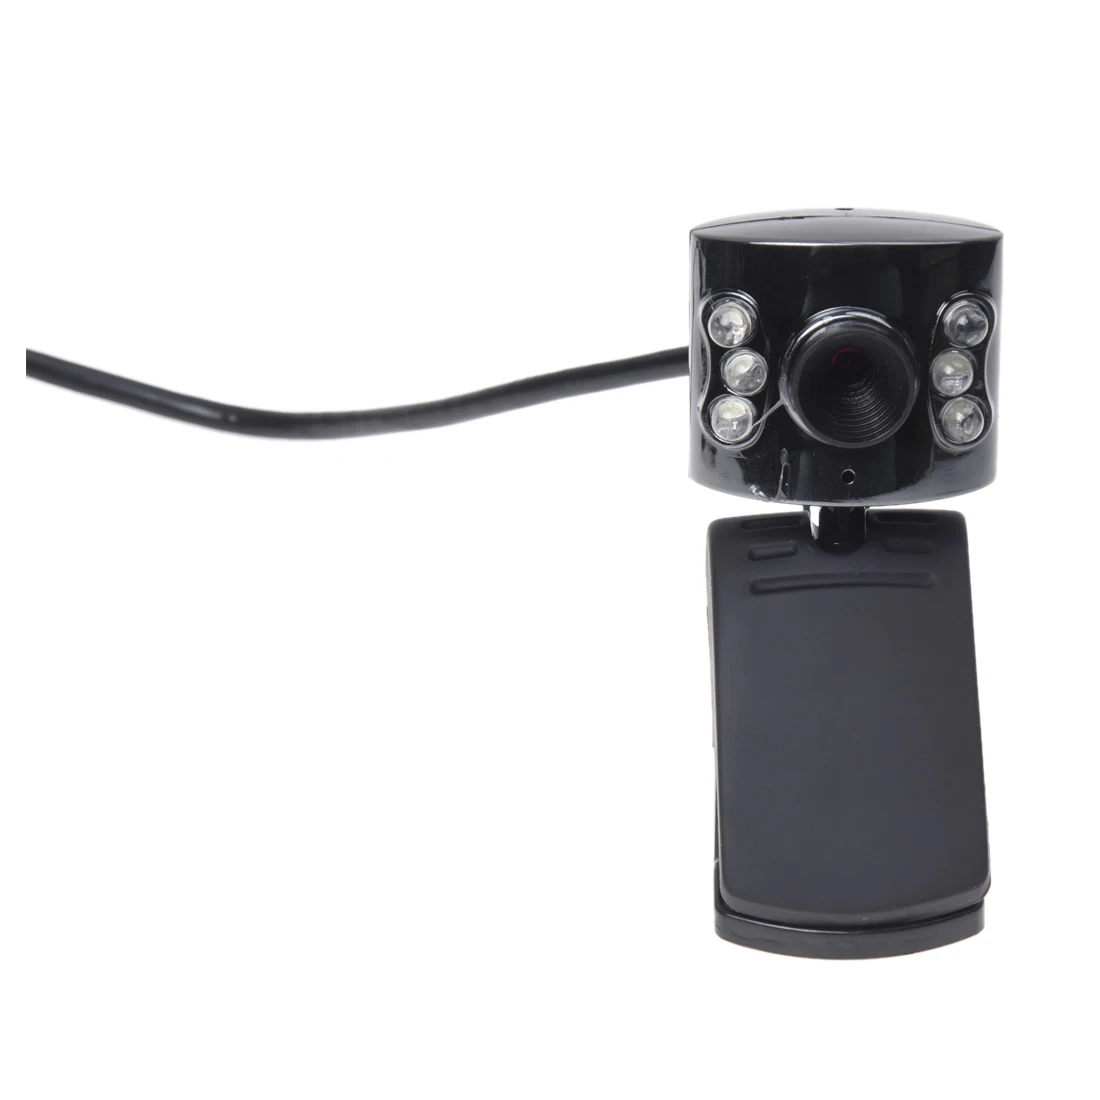 USB веб-камера Веб-камера+ 8,0 MPX микрофон Портативный ПК